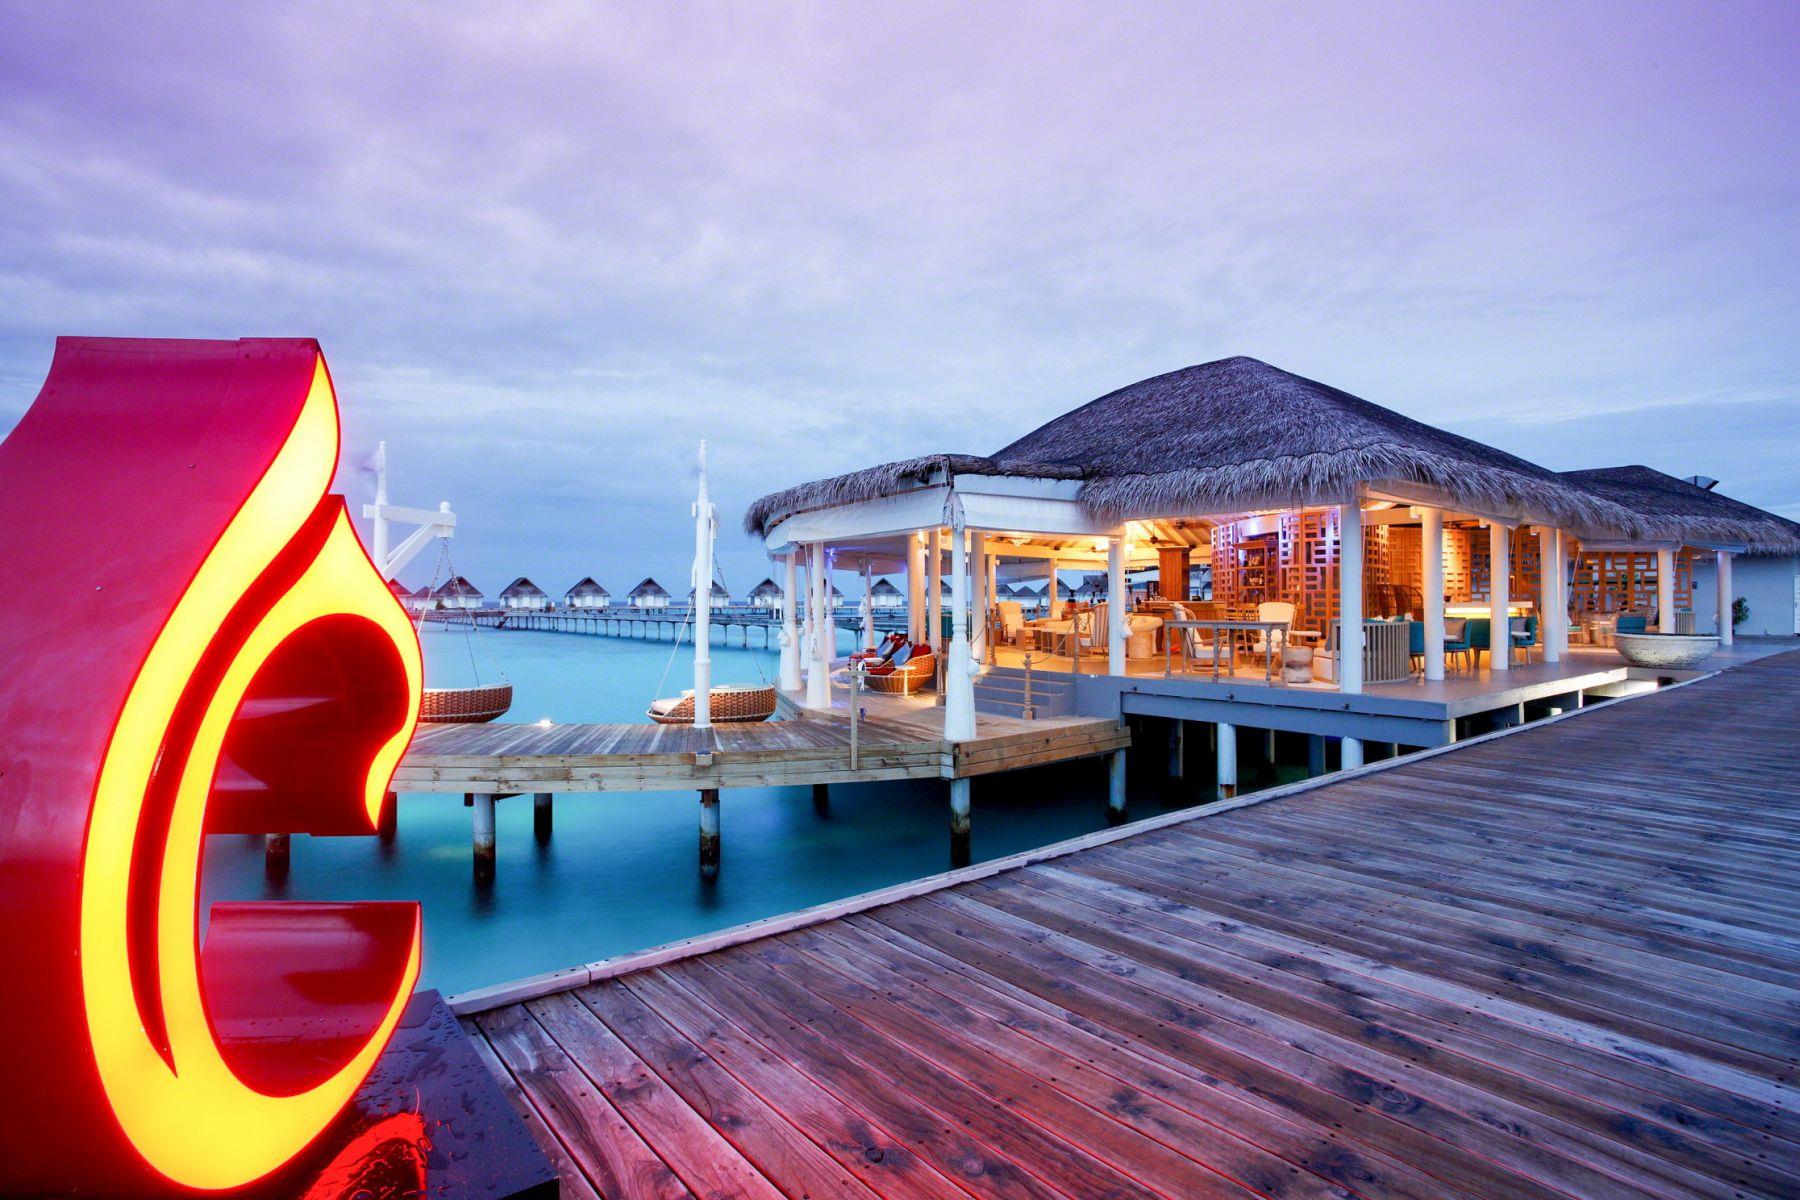 Centara grand island resort. Centara Grand Island Resort & Spa. Centara Grand Maldives. Centara Grand Resort & Spa Maldives. Grand Centara Мальдивы Мальдивы отель.